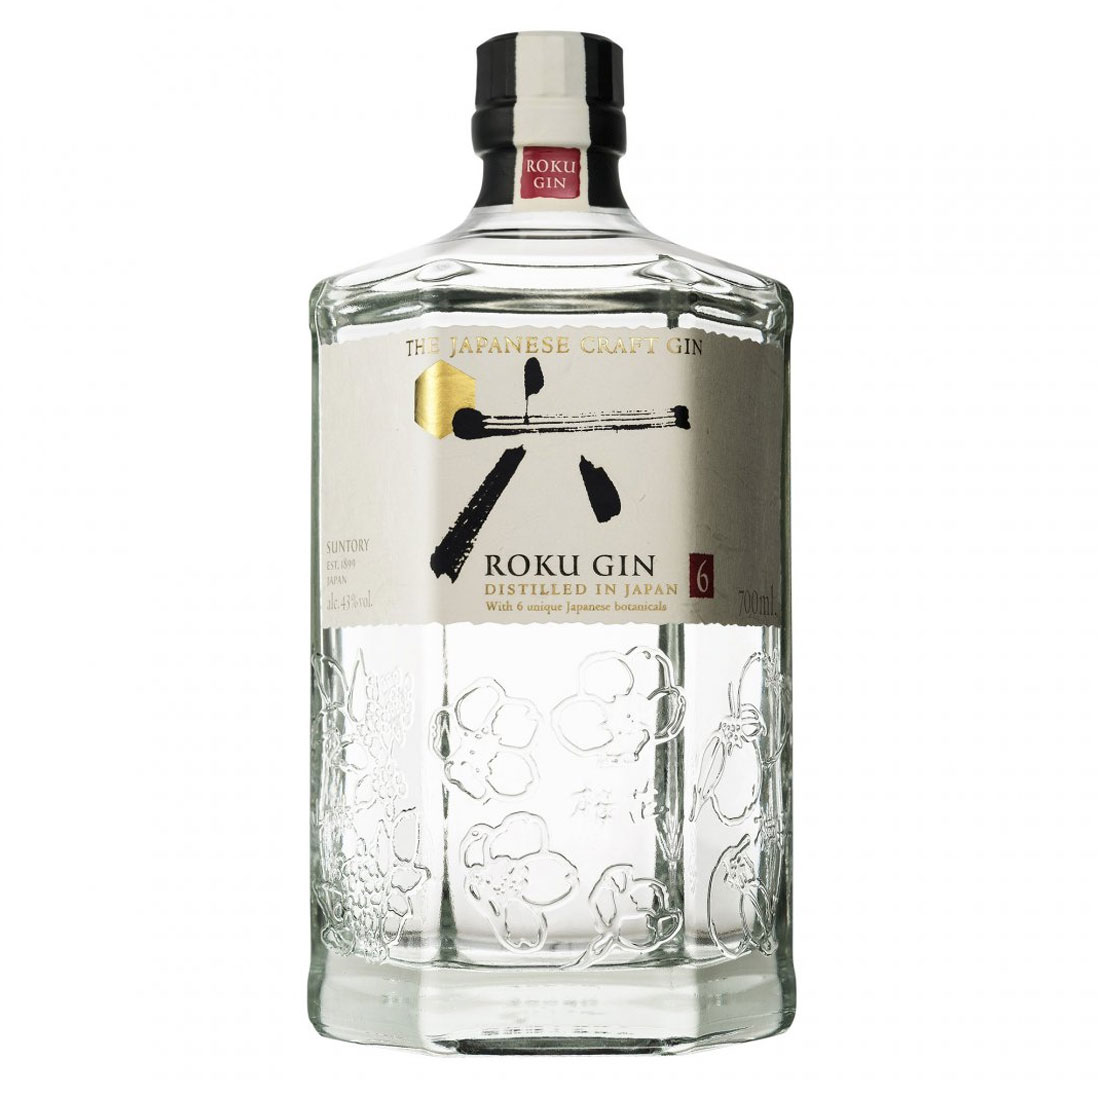 LB_Bottle-Suntory-Roku-Gin